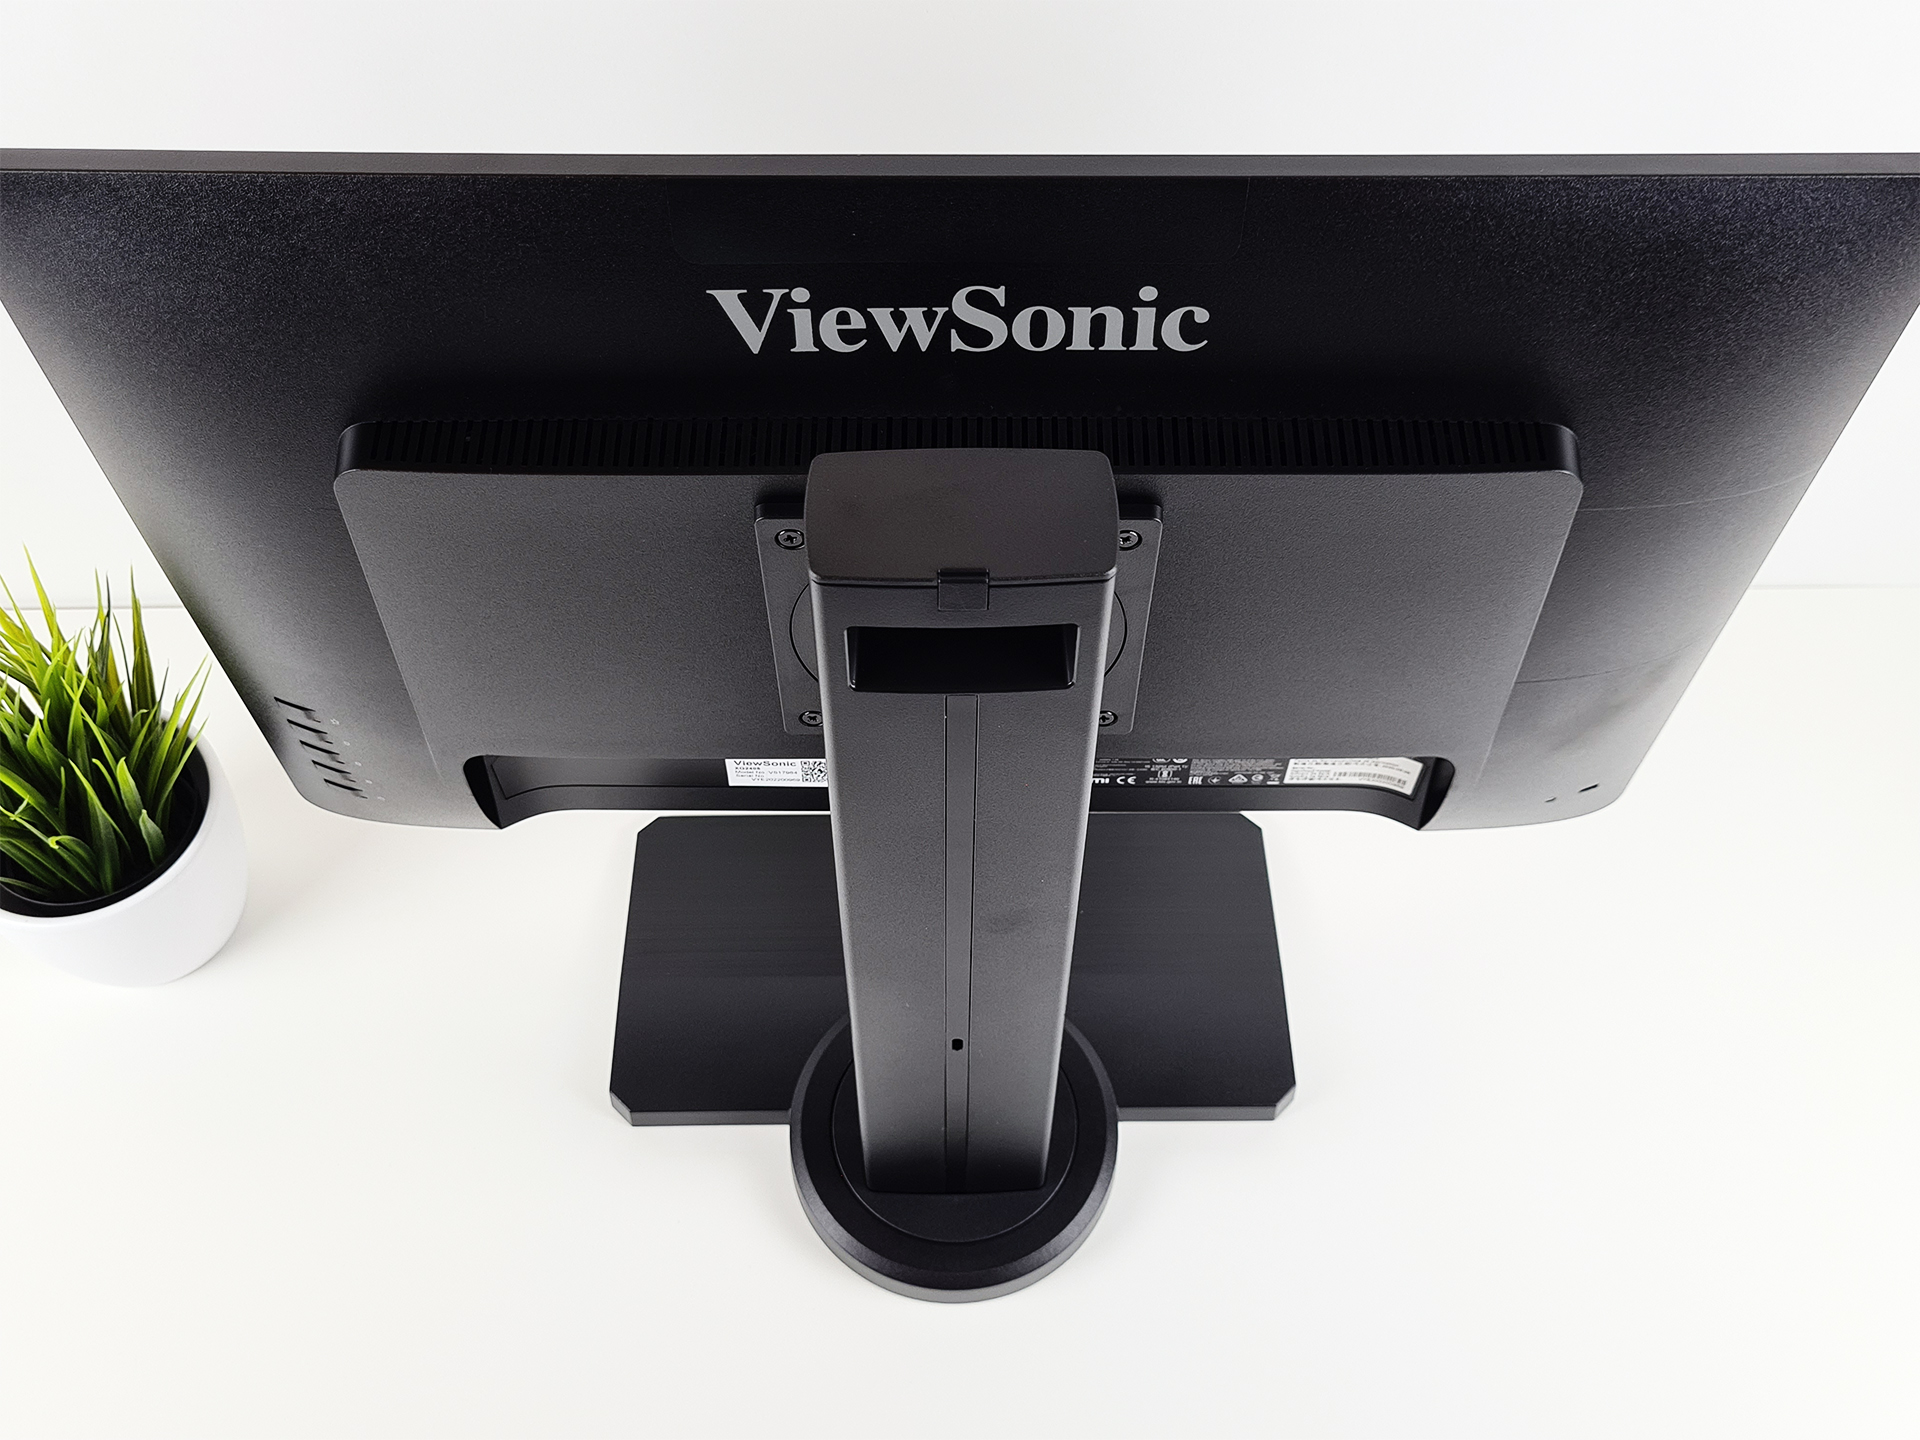 Viewsonic XG2405 Test - Back 2